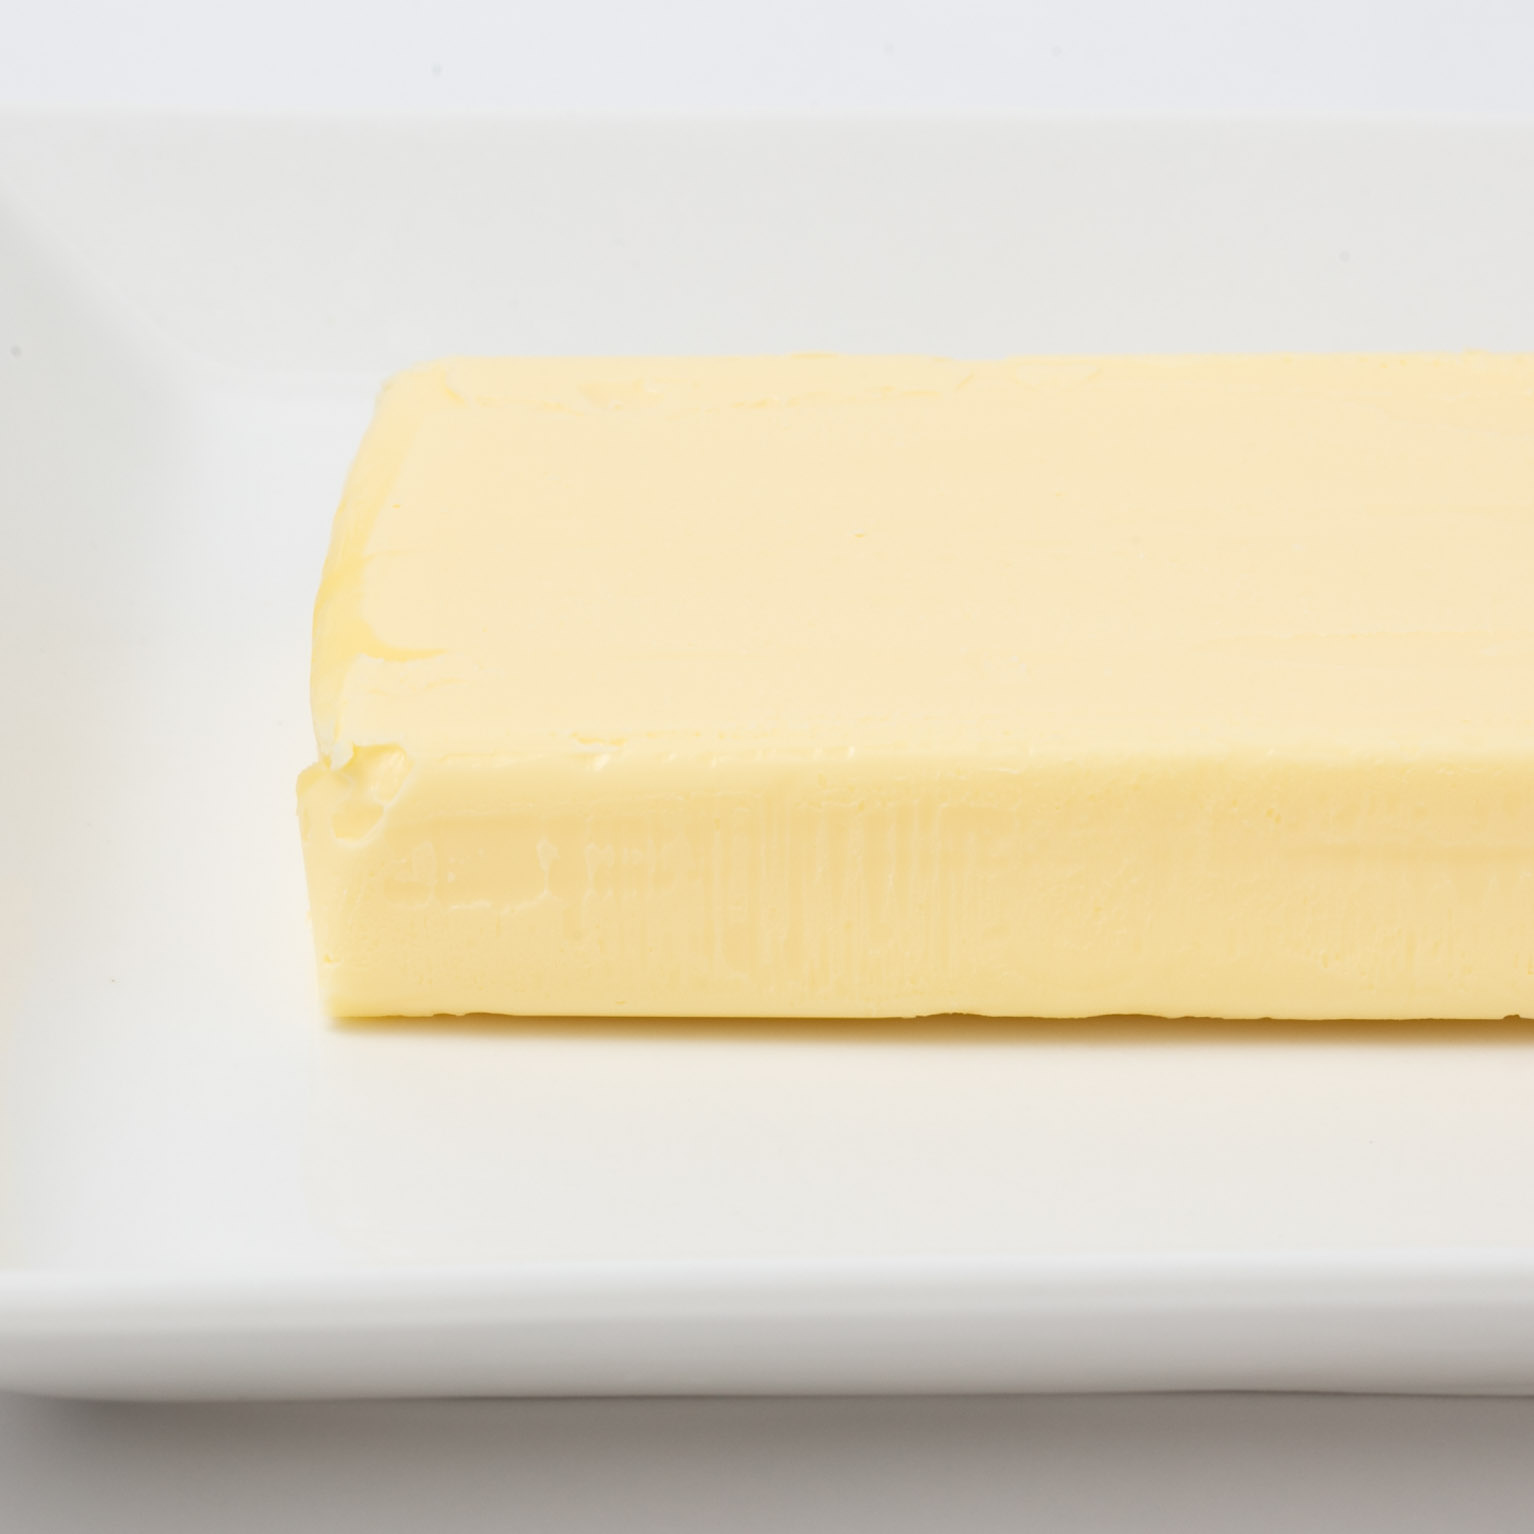 PRESIDENT 発酵バター(無塩) 125